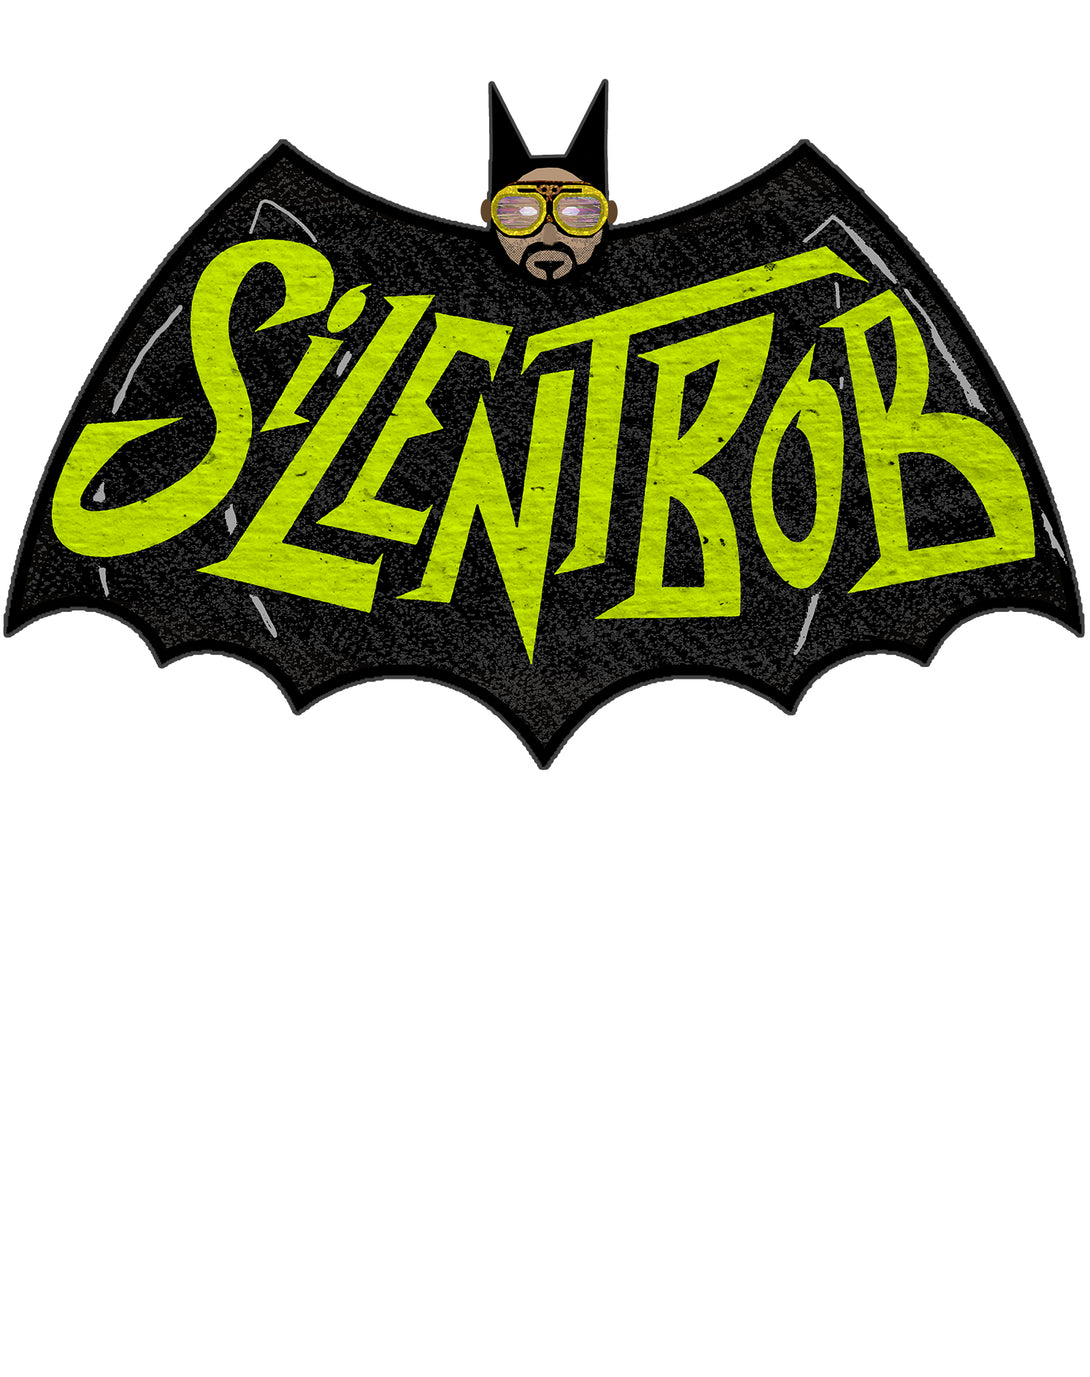 Kevin Smith View Askewniverse Logo Silent Bat Bob Official Men's T-Shirt White - Urban Species Design Close Up